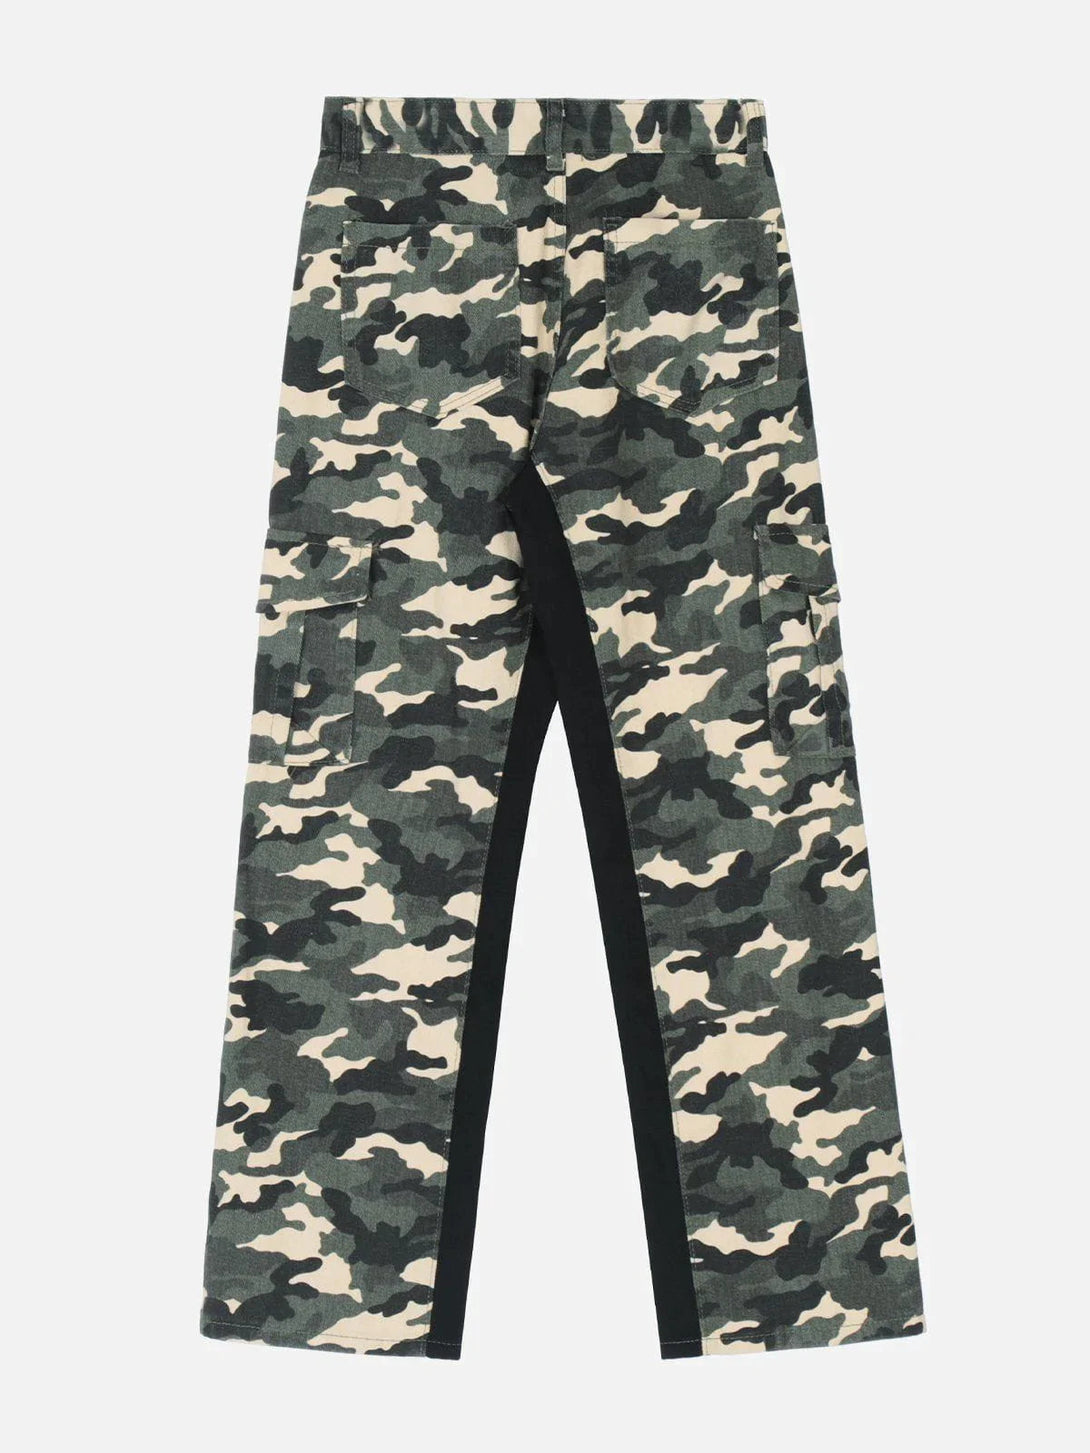 Majesda® - Splicing Camouflage Print Pants outfit ideas streetwear fashion